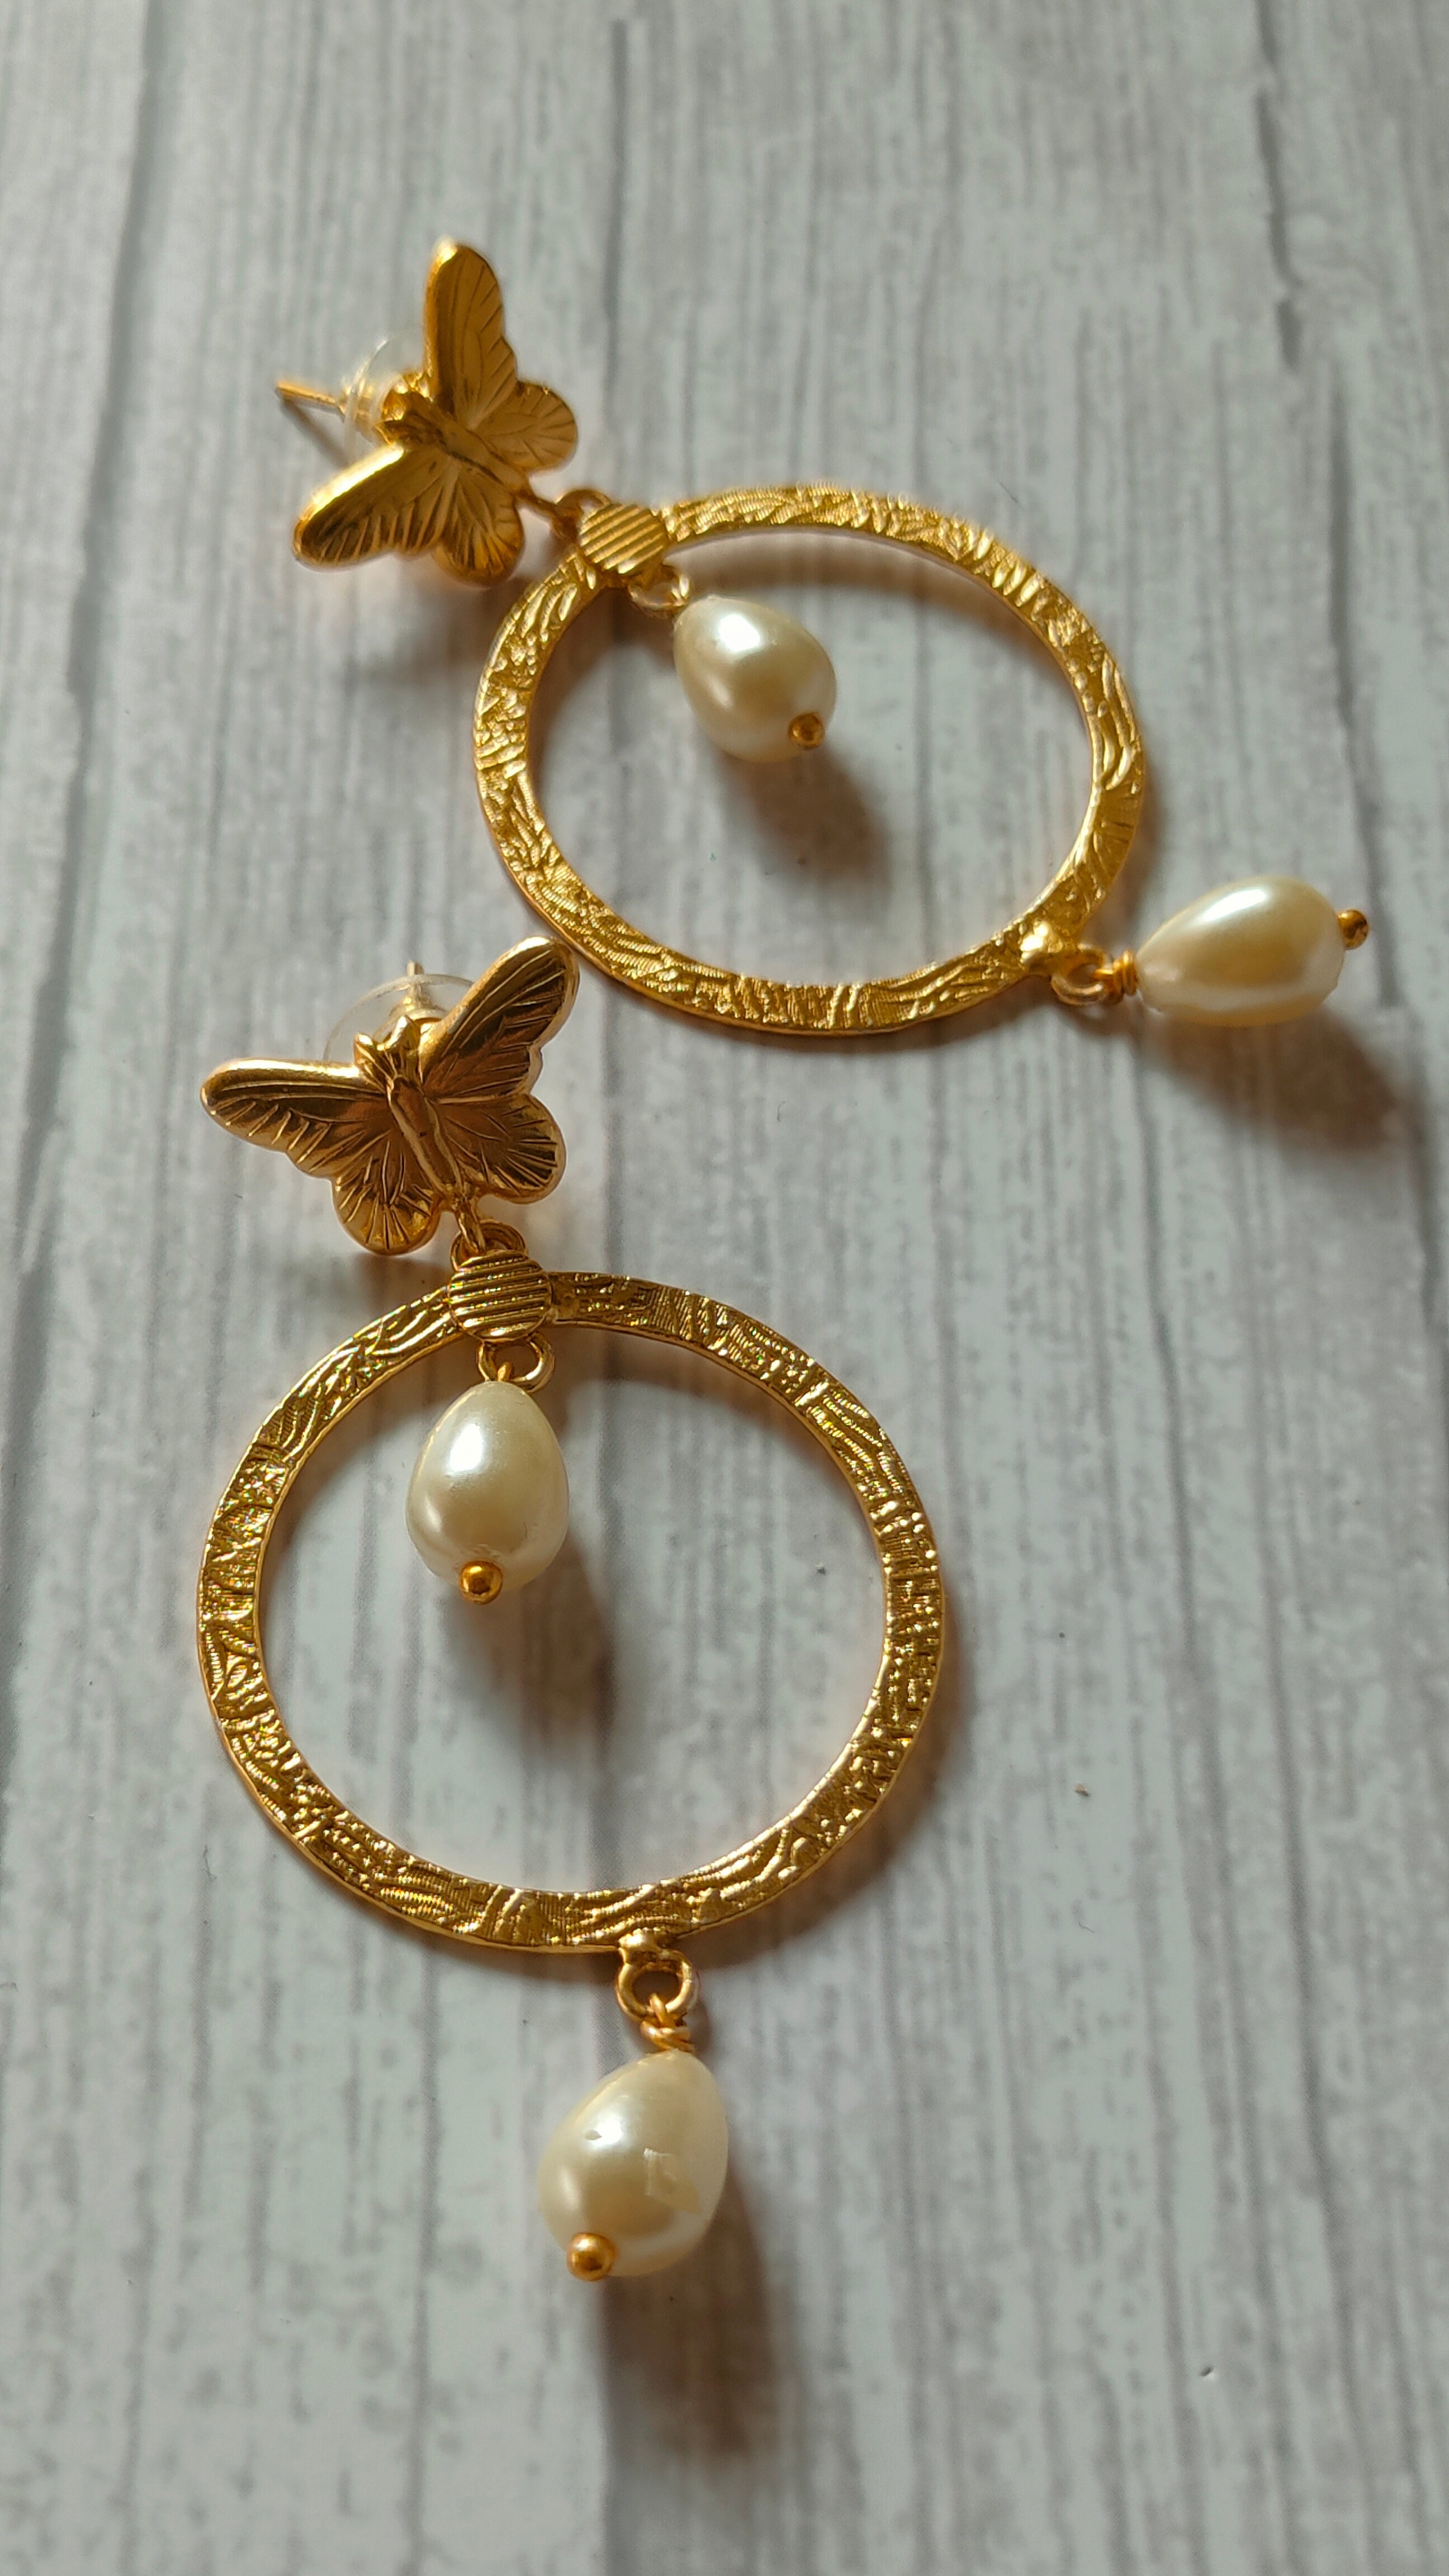 Circular Brass Dangler Earrings with Pearl Beads